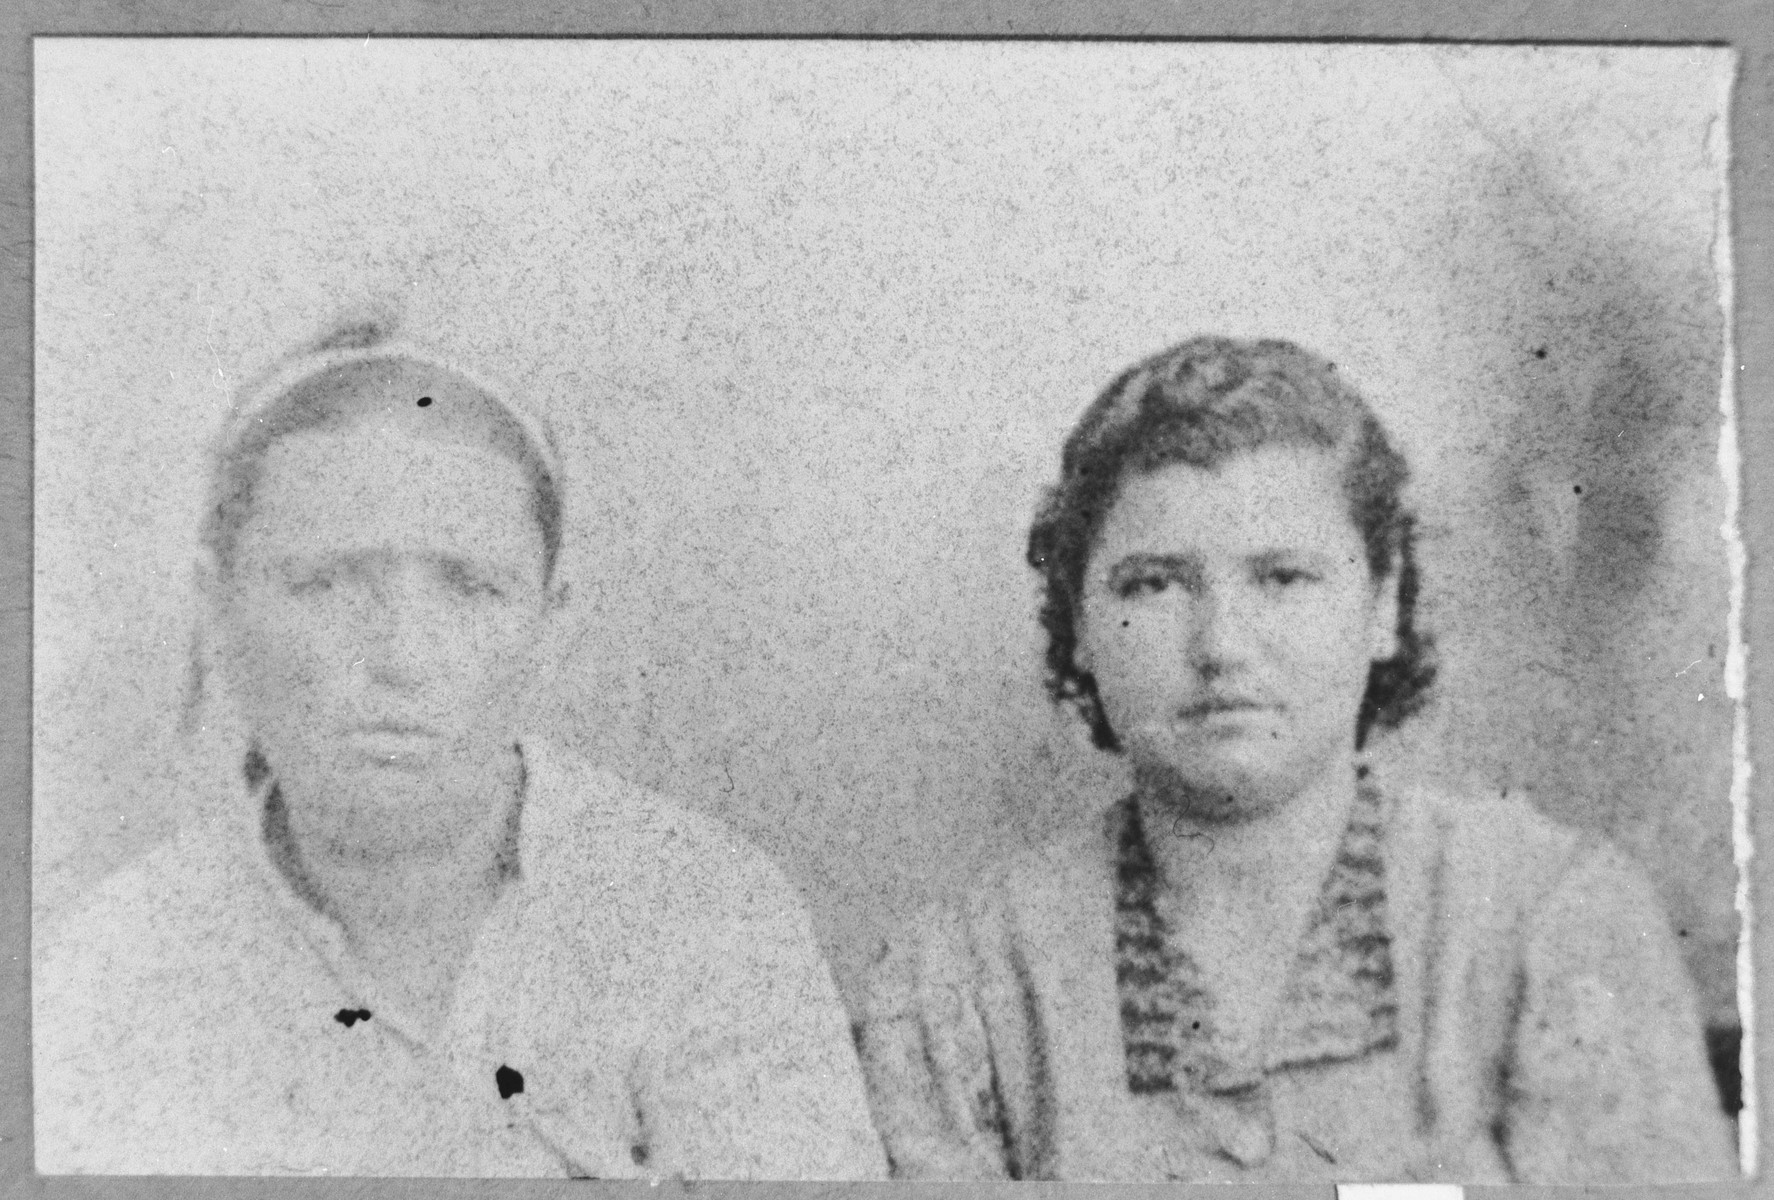 Portrait of Suncho Albala, wife of Avram Albala, and Djoya Albala, daughter of Avram Albala.  Djoya was a manservant.  They lived at Drinska 119 in Bitola.